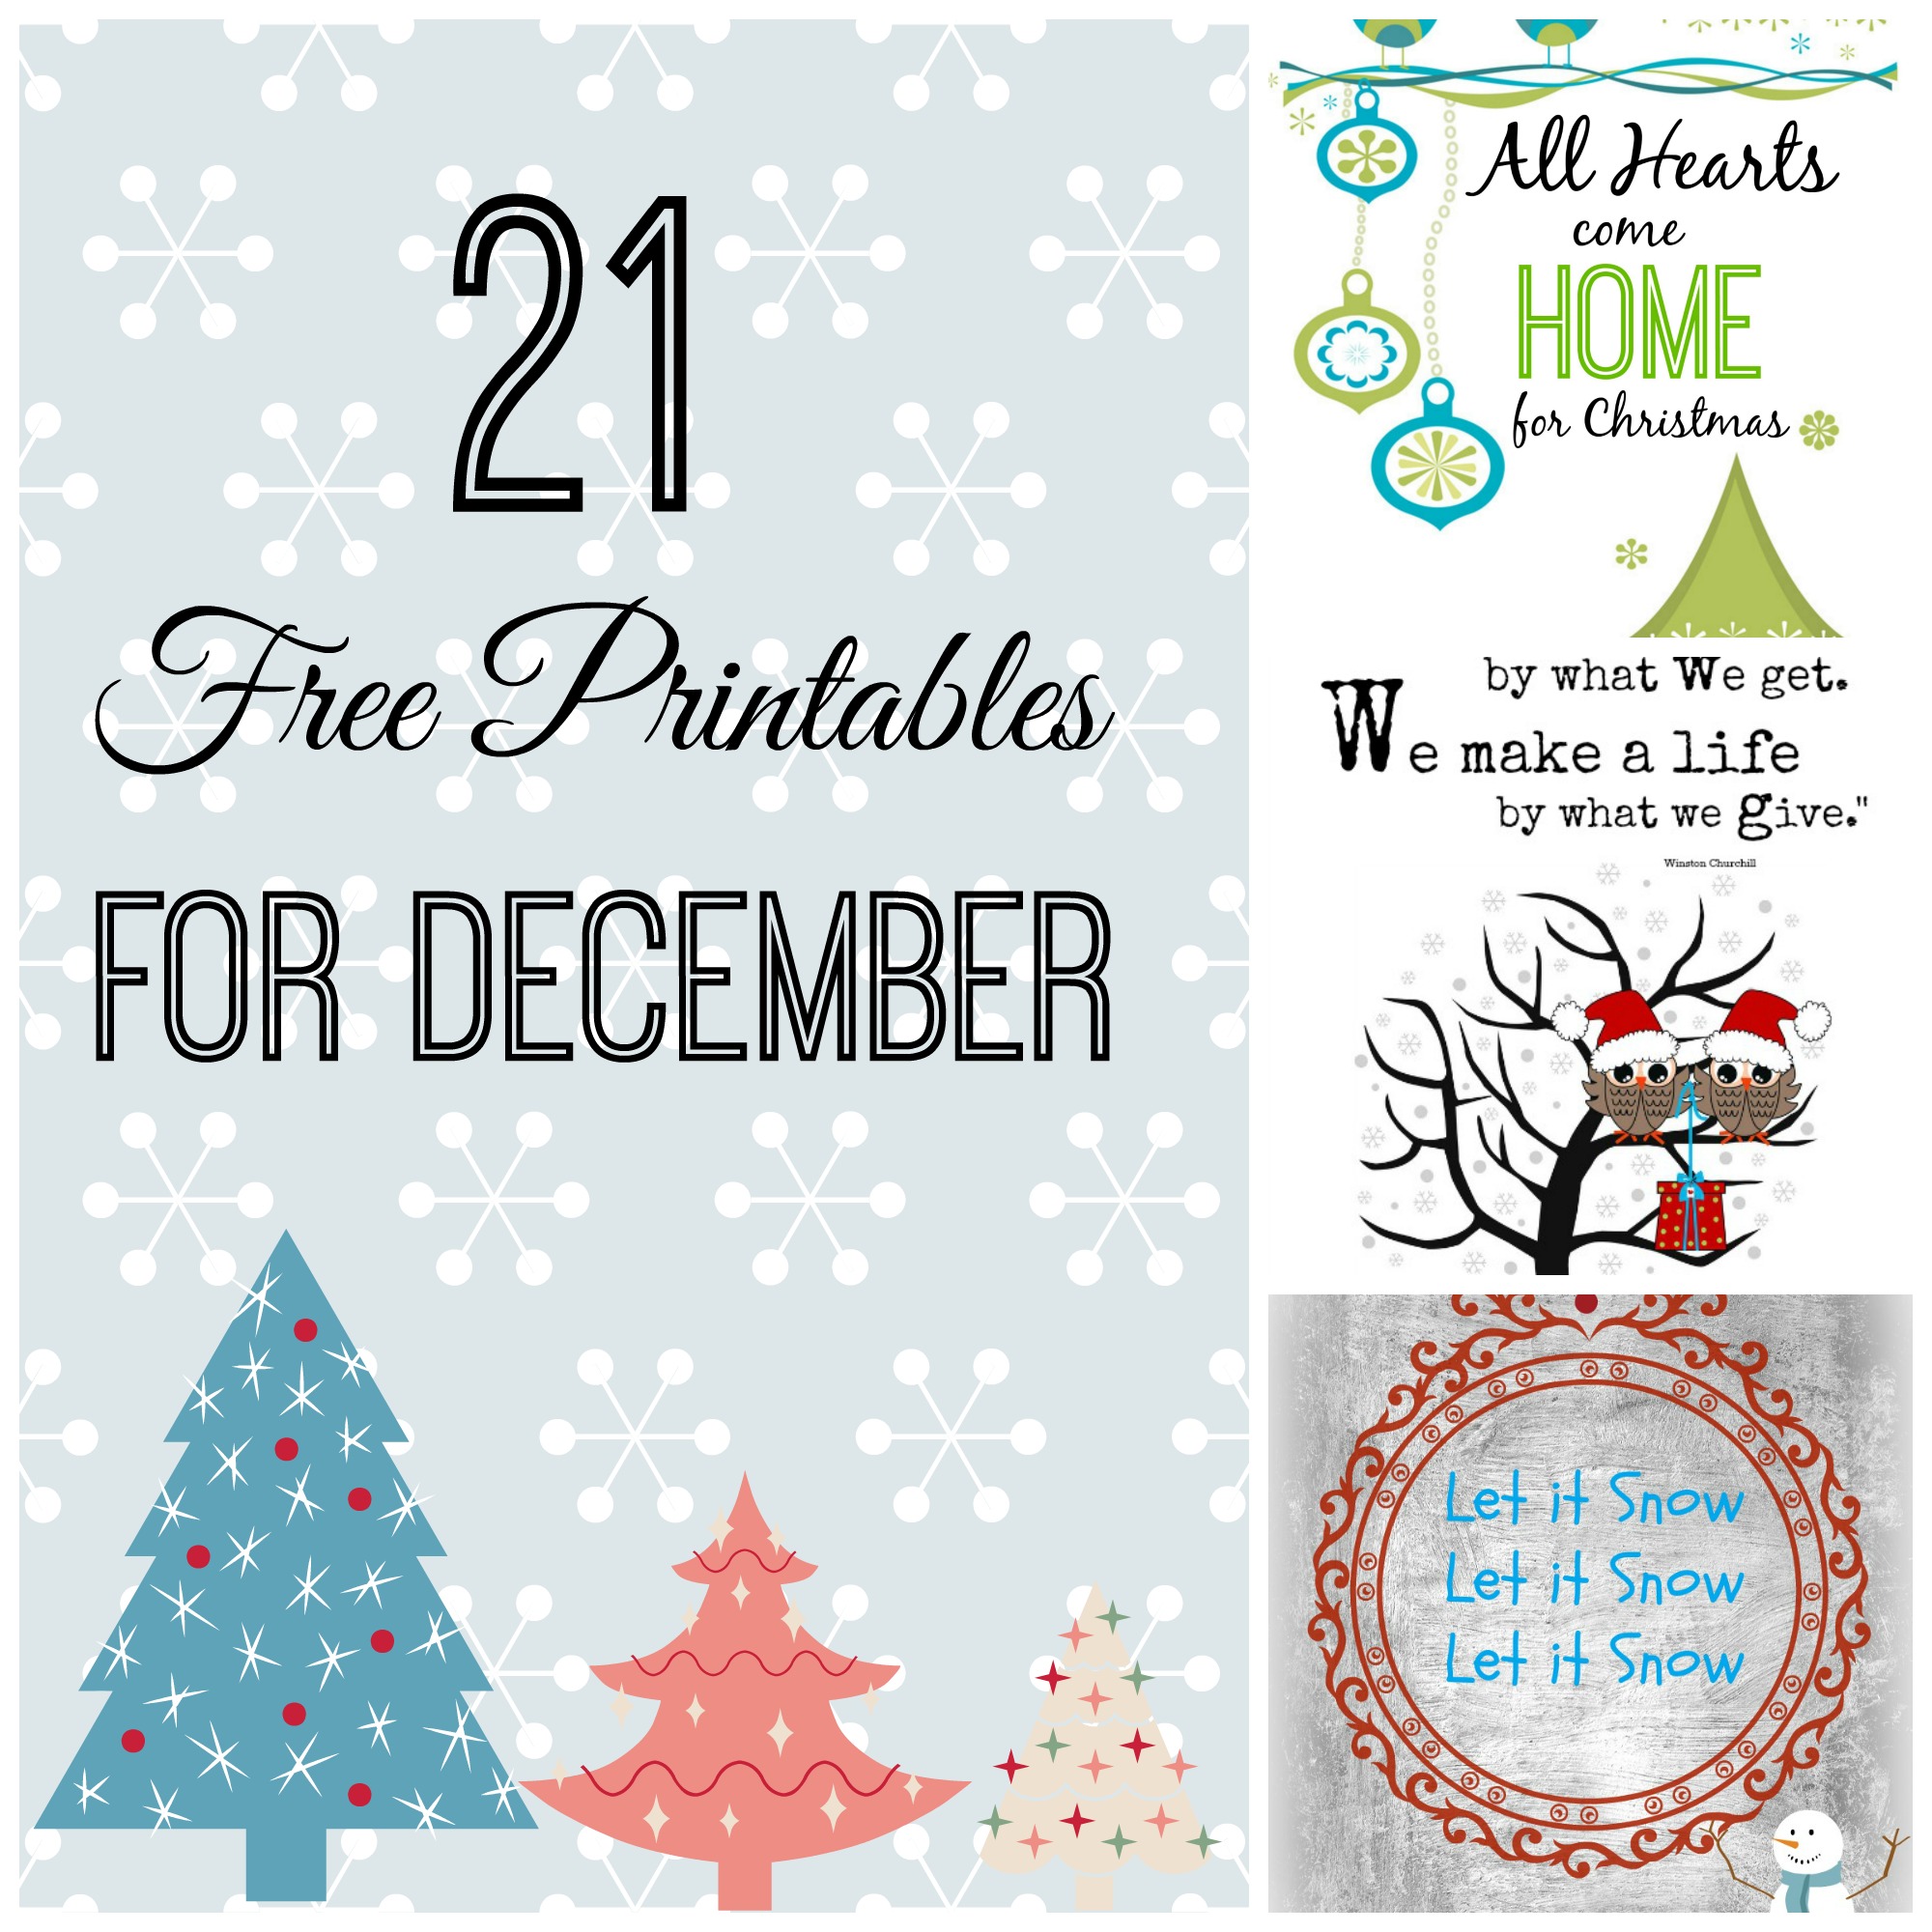 21 free printable dowloads for December